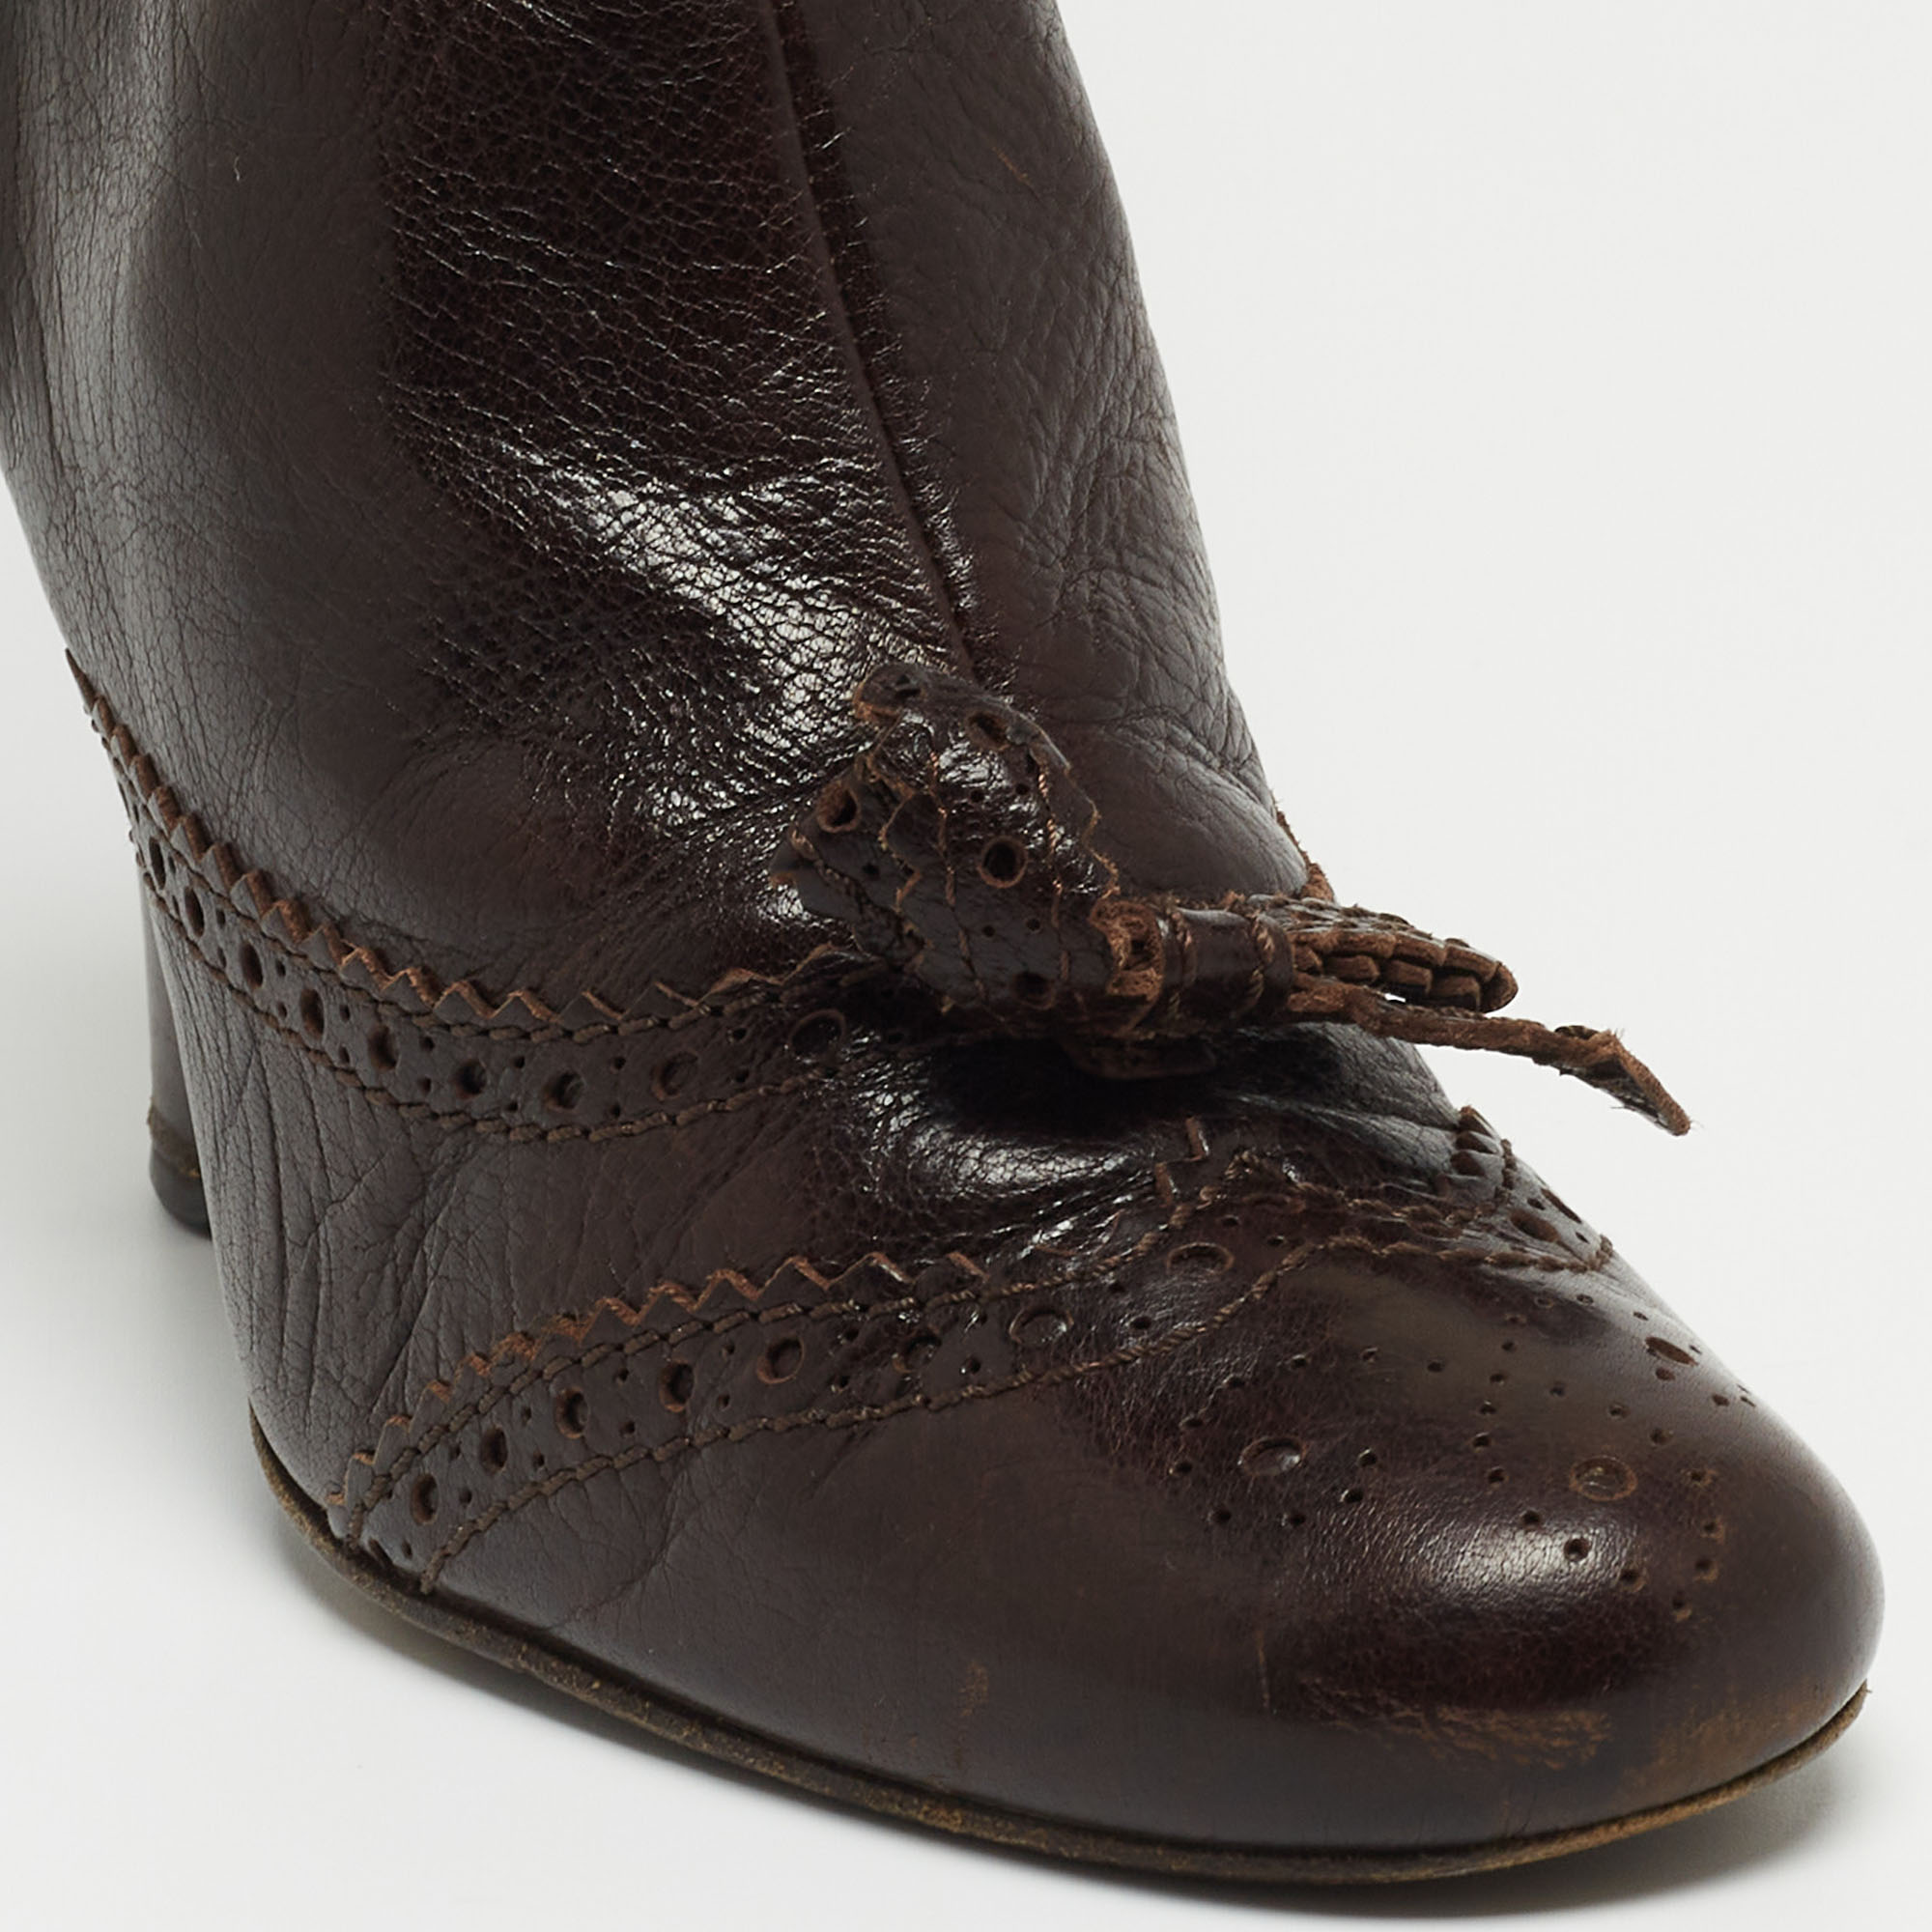 Miu Miu Brown Leather Mid Calf Boots Size 38